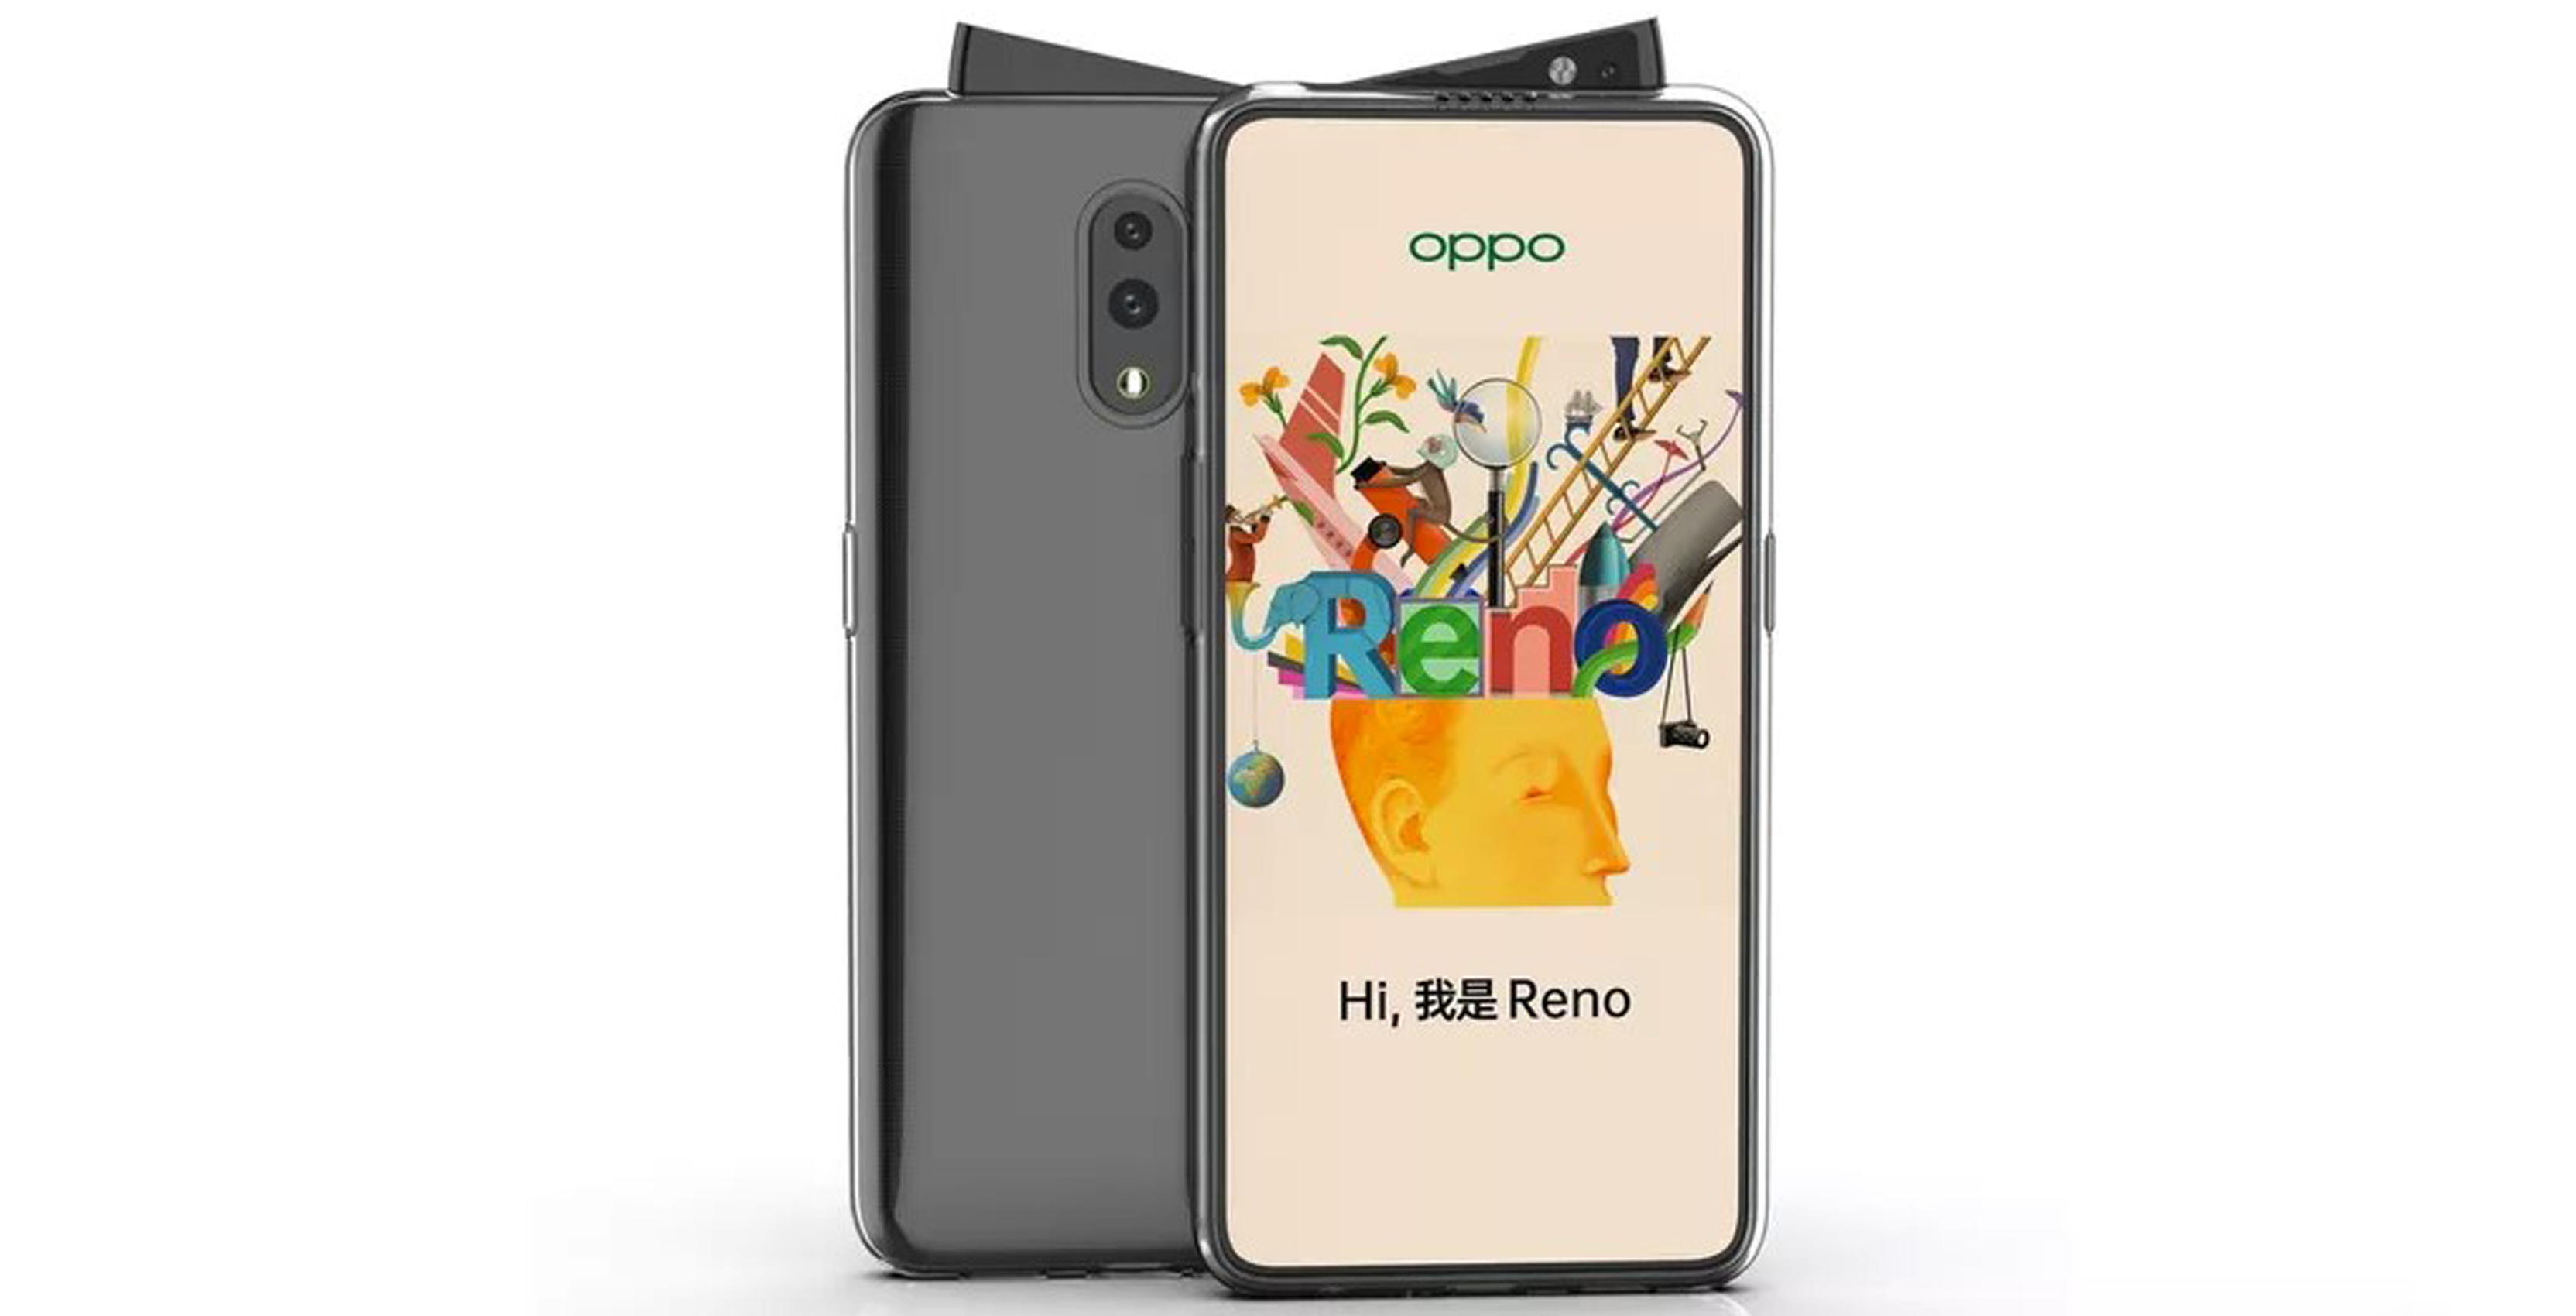 Oppo's new Reno smartphone